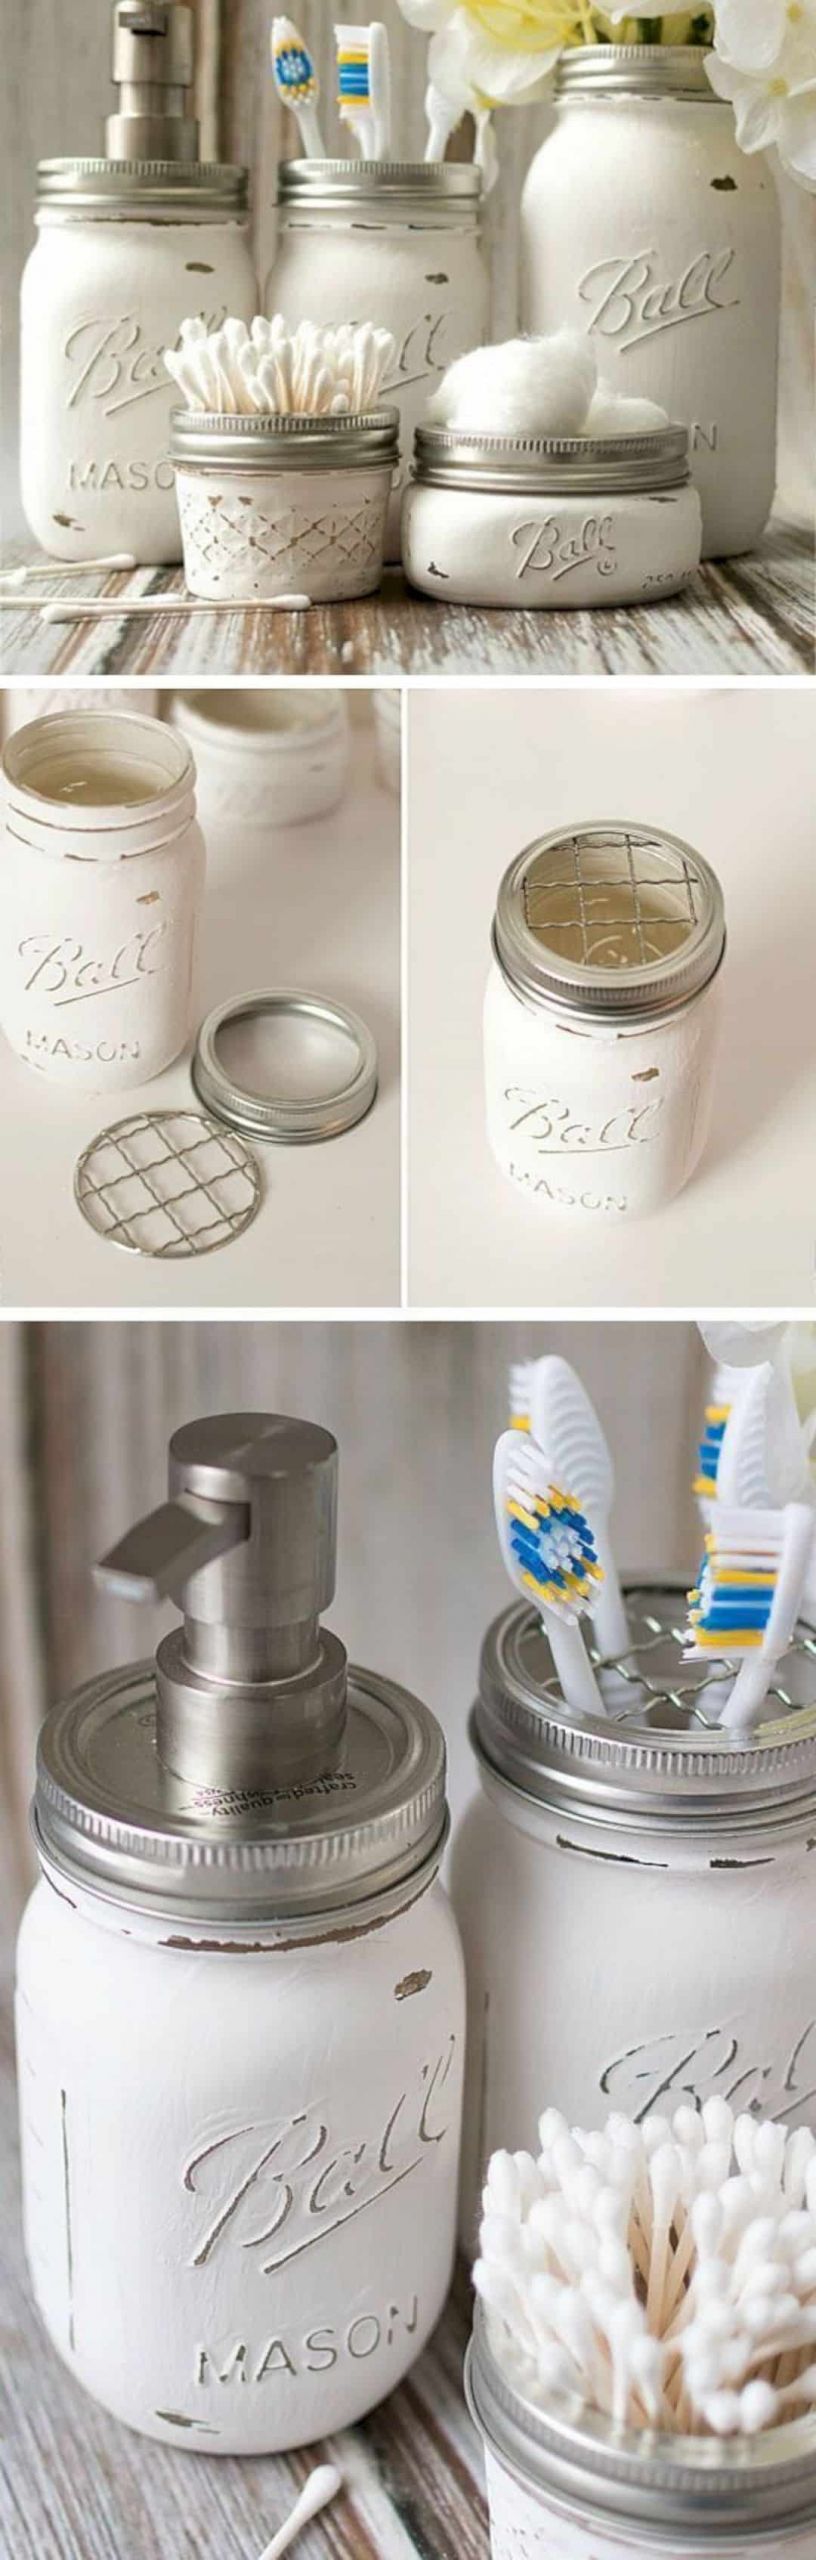 Mason Jar Bathroom Decor
 18 Home Decor Ideas with Mason Jars Futurist Architecture